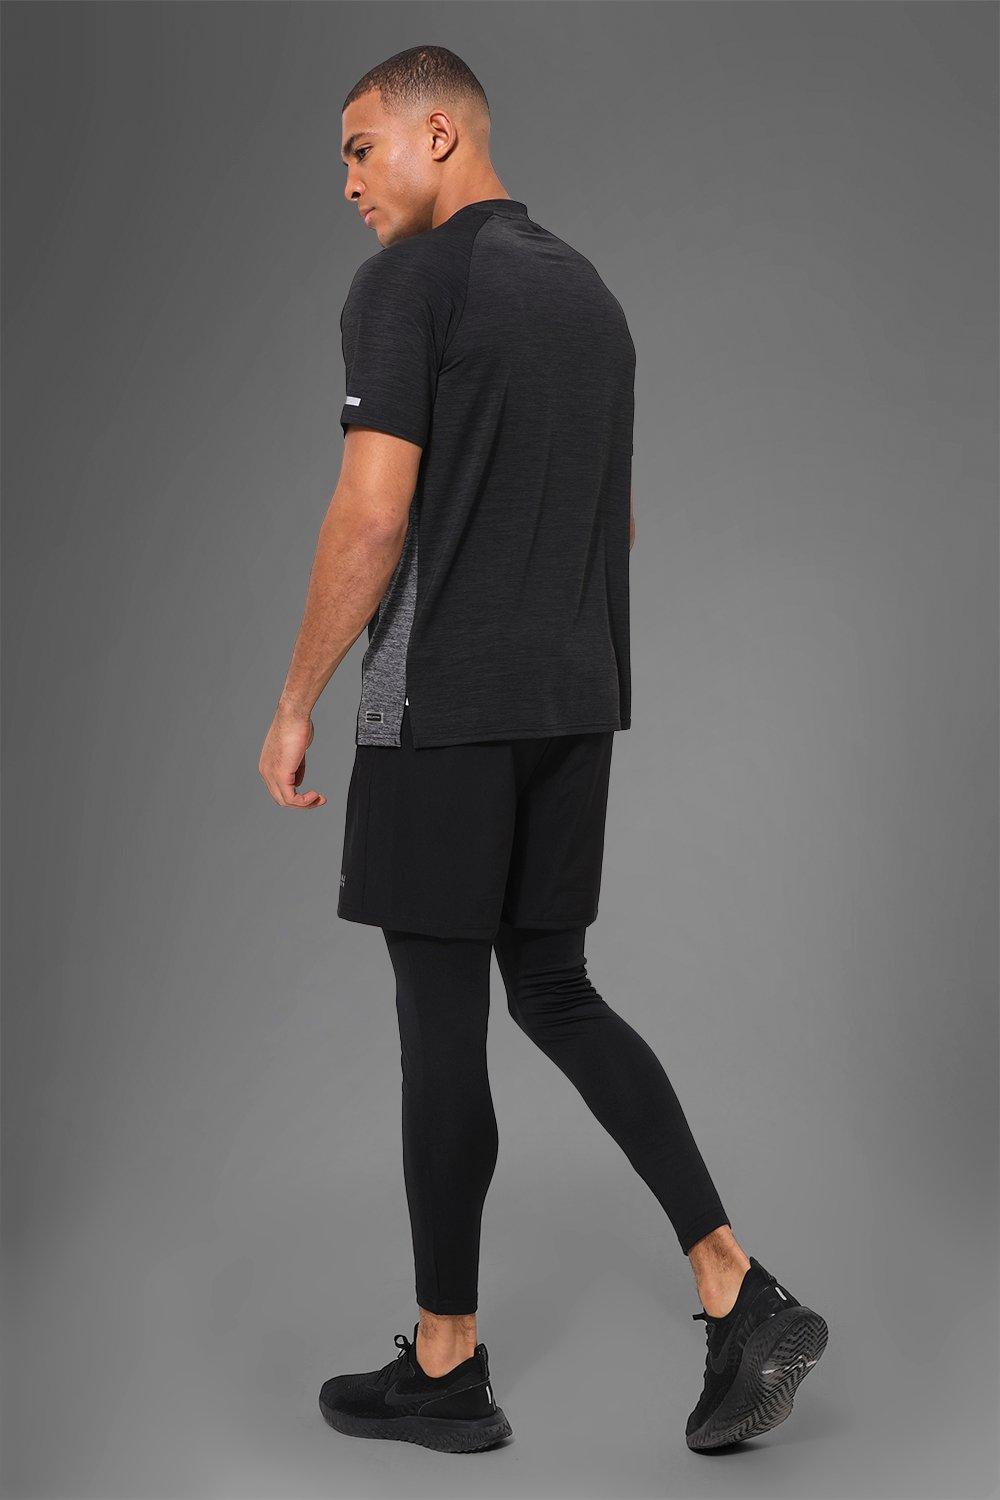 https://media.boohoo.com/i/boohoo/amm08956_black_xl_1/male-black-man-active-gym-2-in-1-legging-shorts